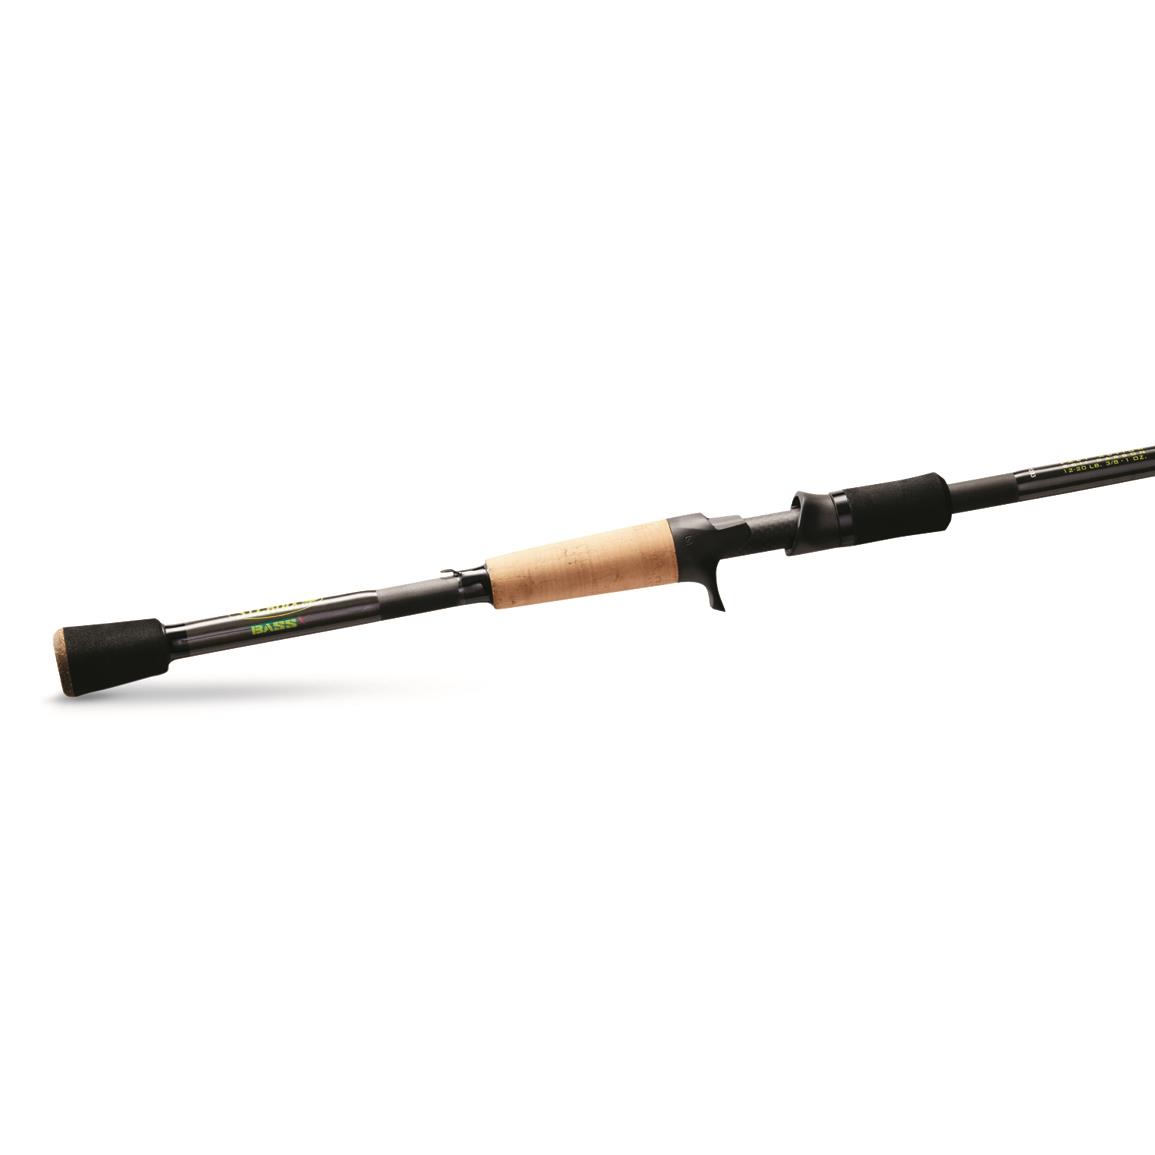 St. Croix Bass X Casting Rod, 6'6" Length, Medium Heavy Power, Fast Action